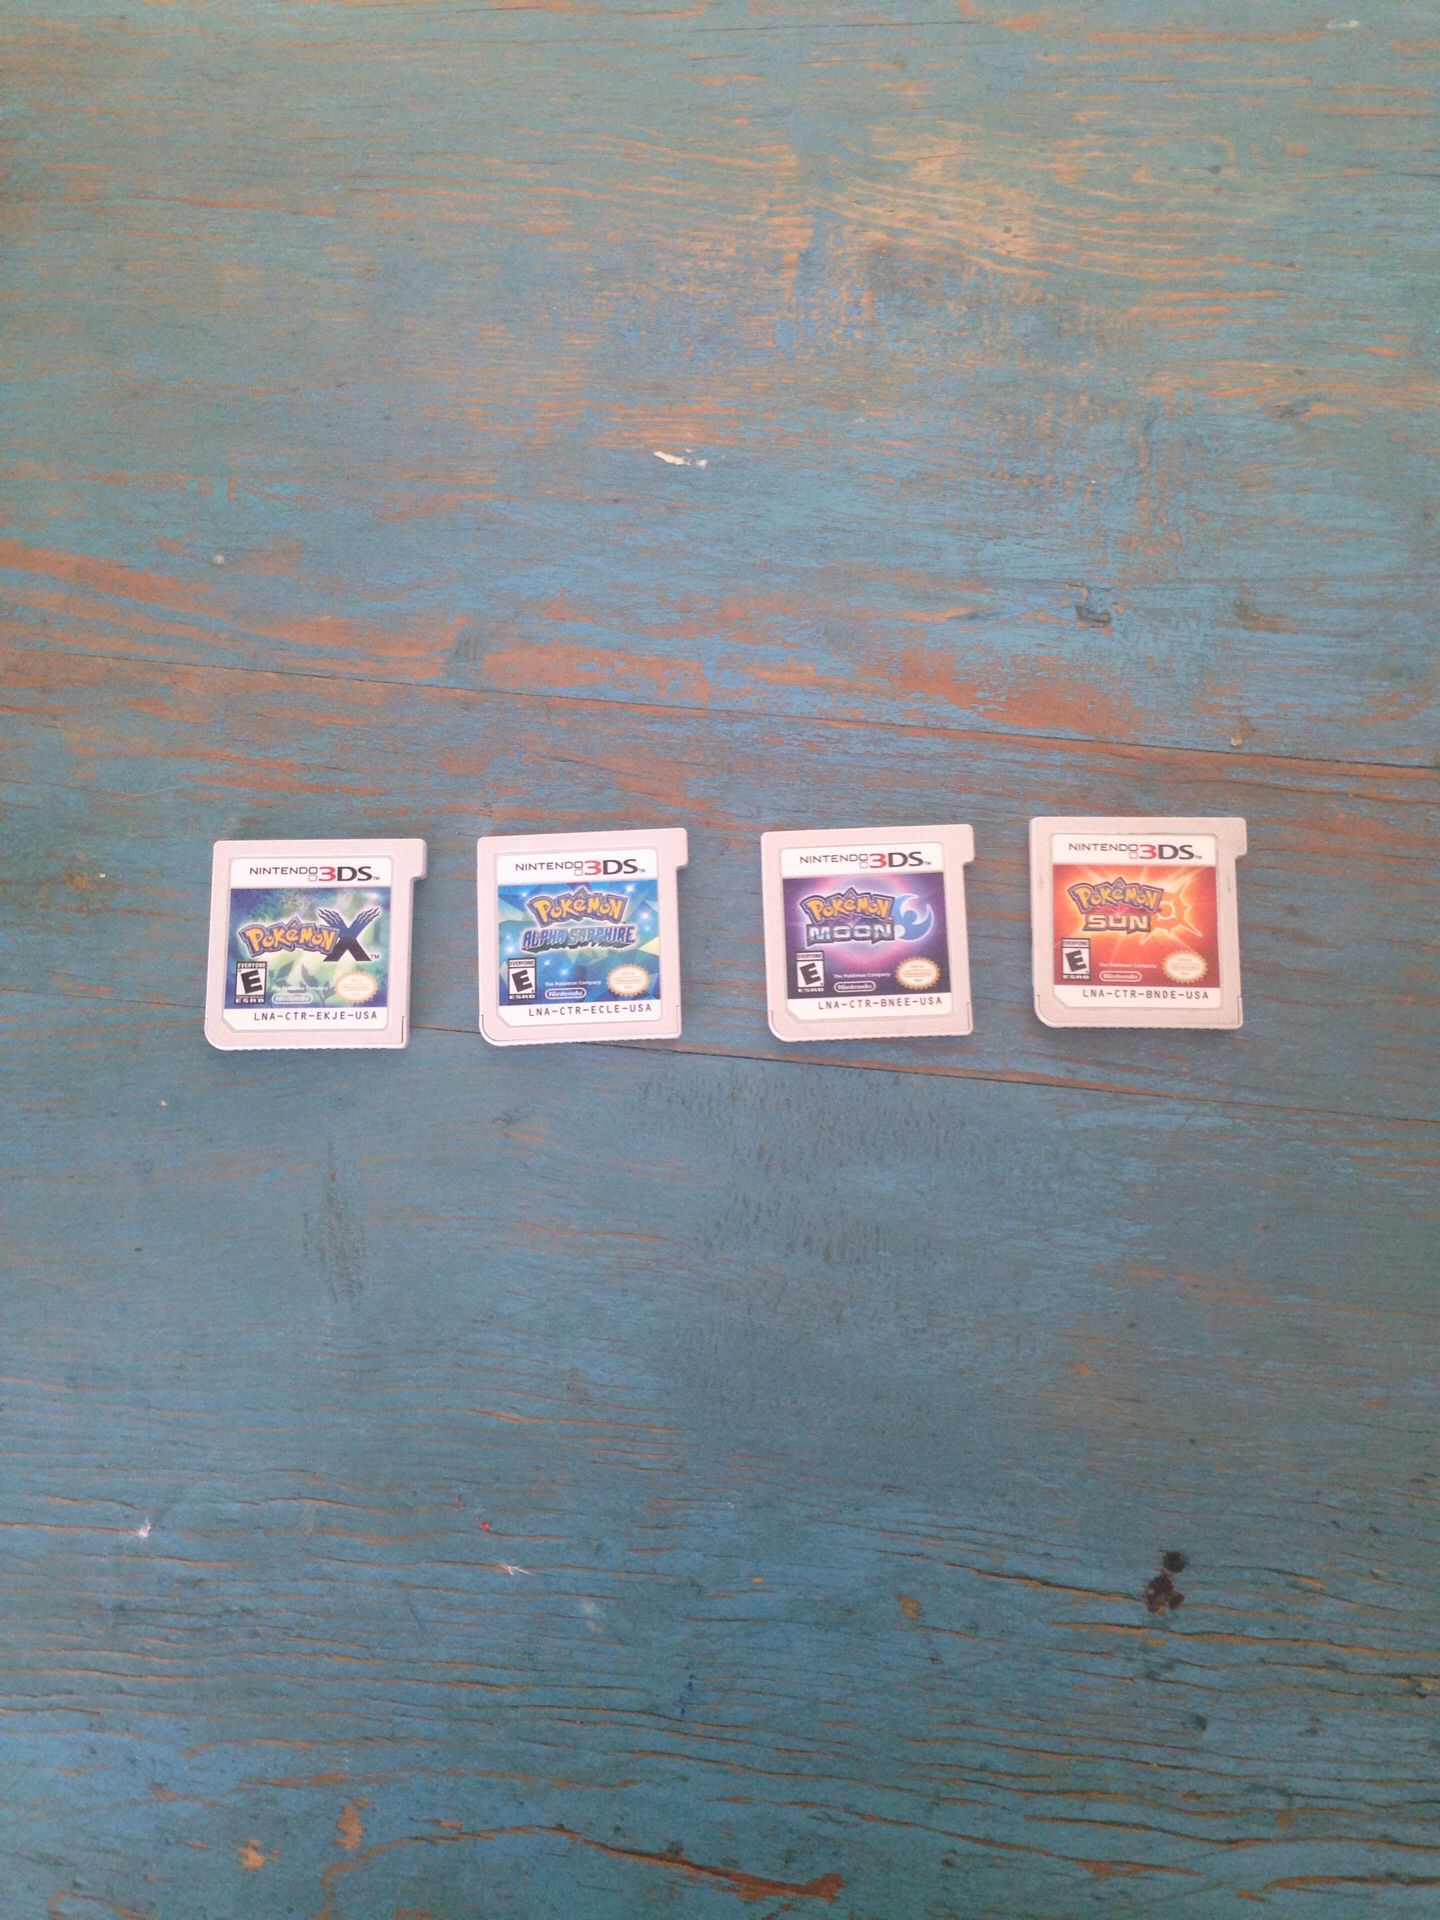 Nintendo 3DS Pokémon games